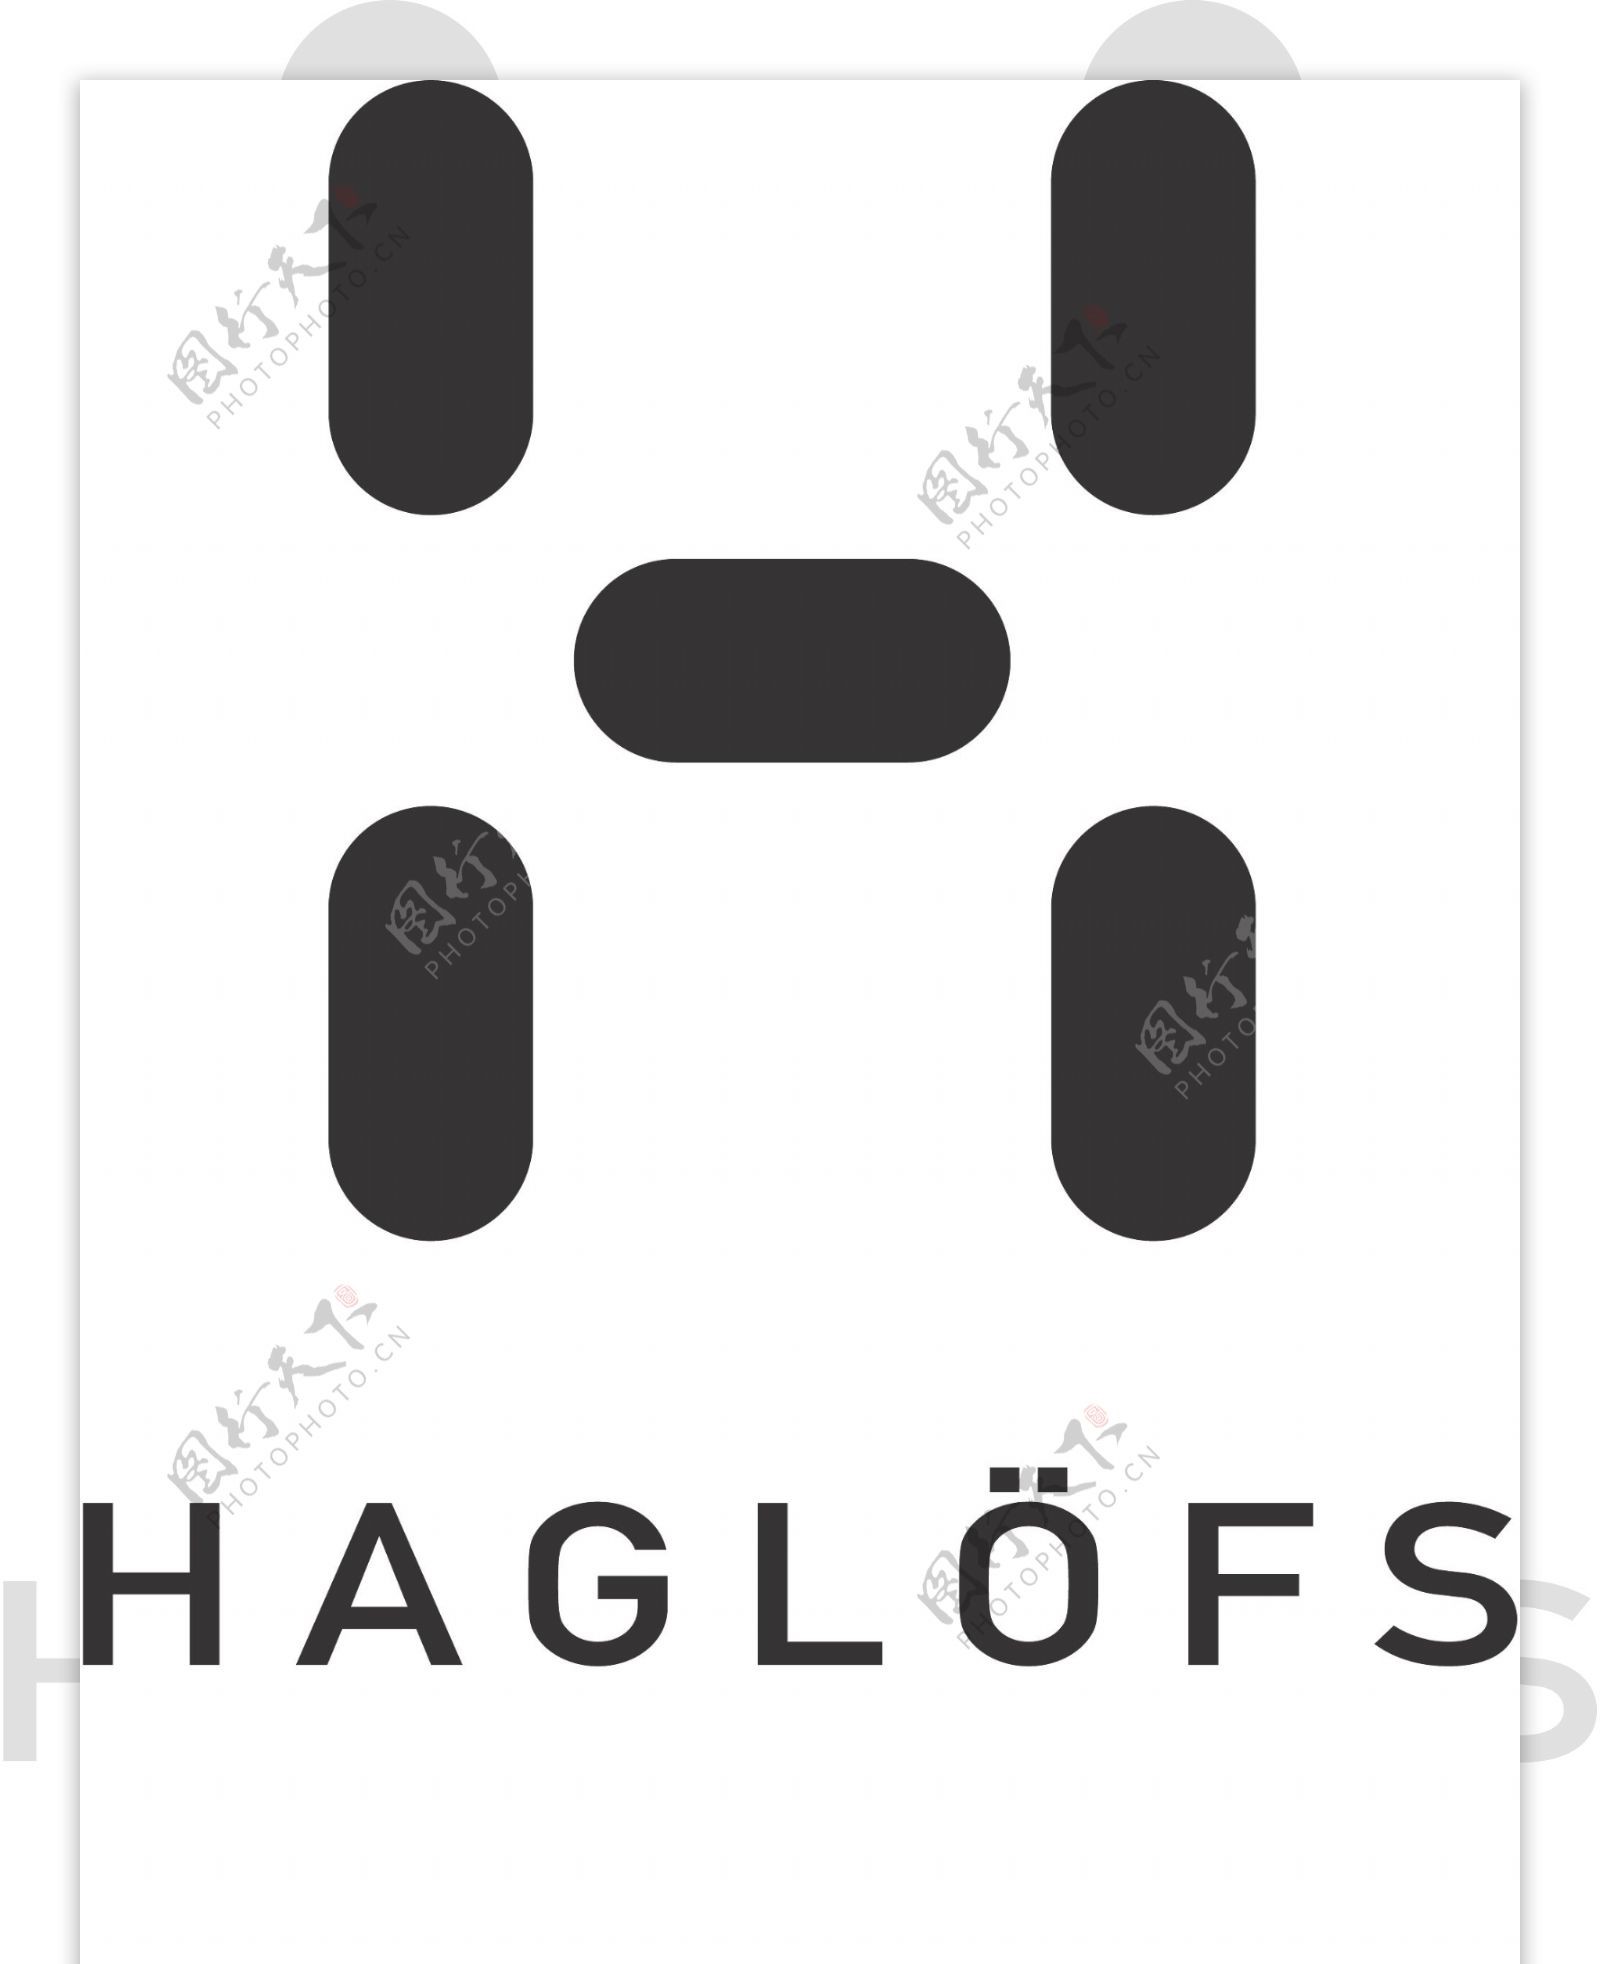 户外品牌HAGLOFS矢量logo